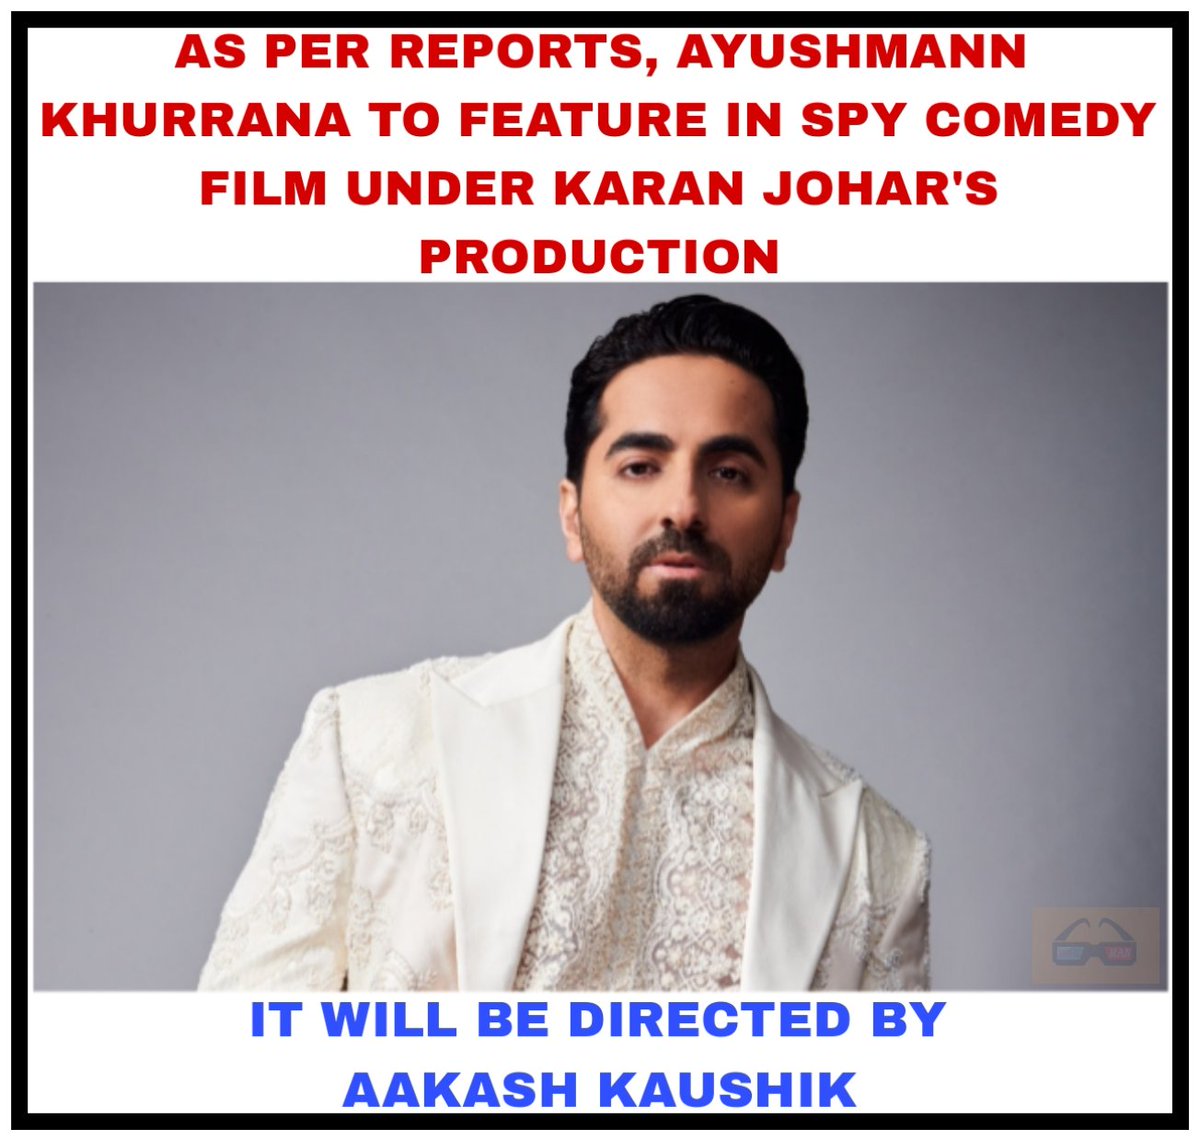 AYUSHMANN IN A SPY COMEDY FILM 
.
.
#ayushmankhurana #ayushmannkhurrana #spyuniverse #spycomedy #karanjohar #karanjoharproduction #dharmaproductions #dharma #aakashkaushik #moviemanblogger
.
.
@moviemanblogger